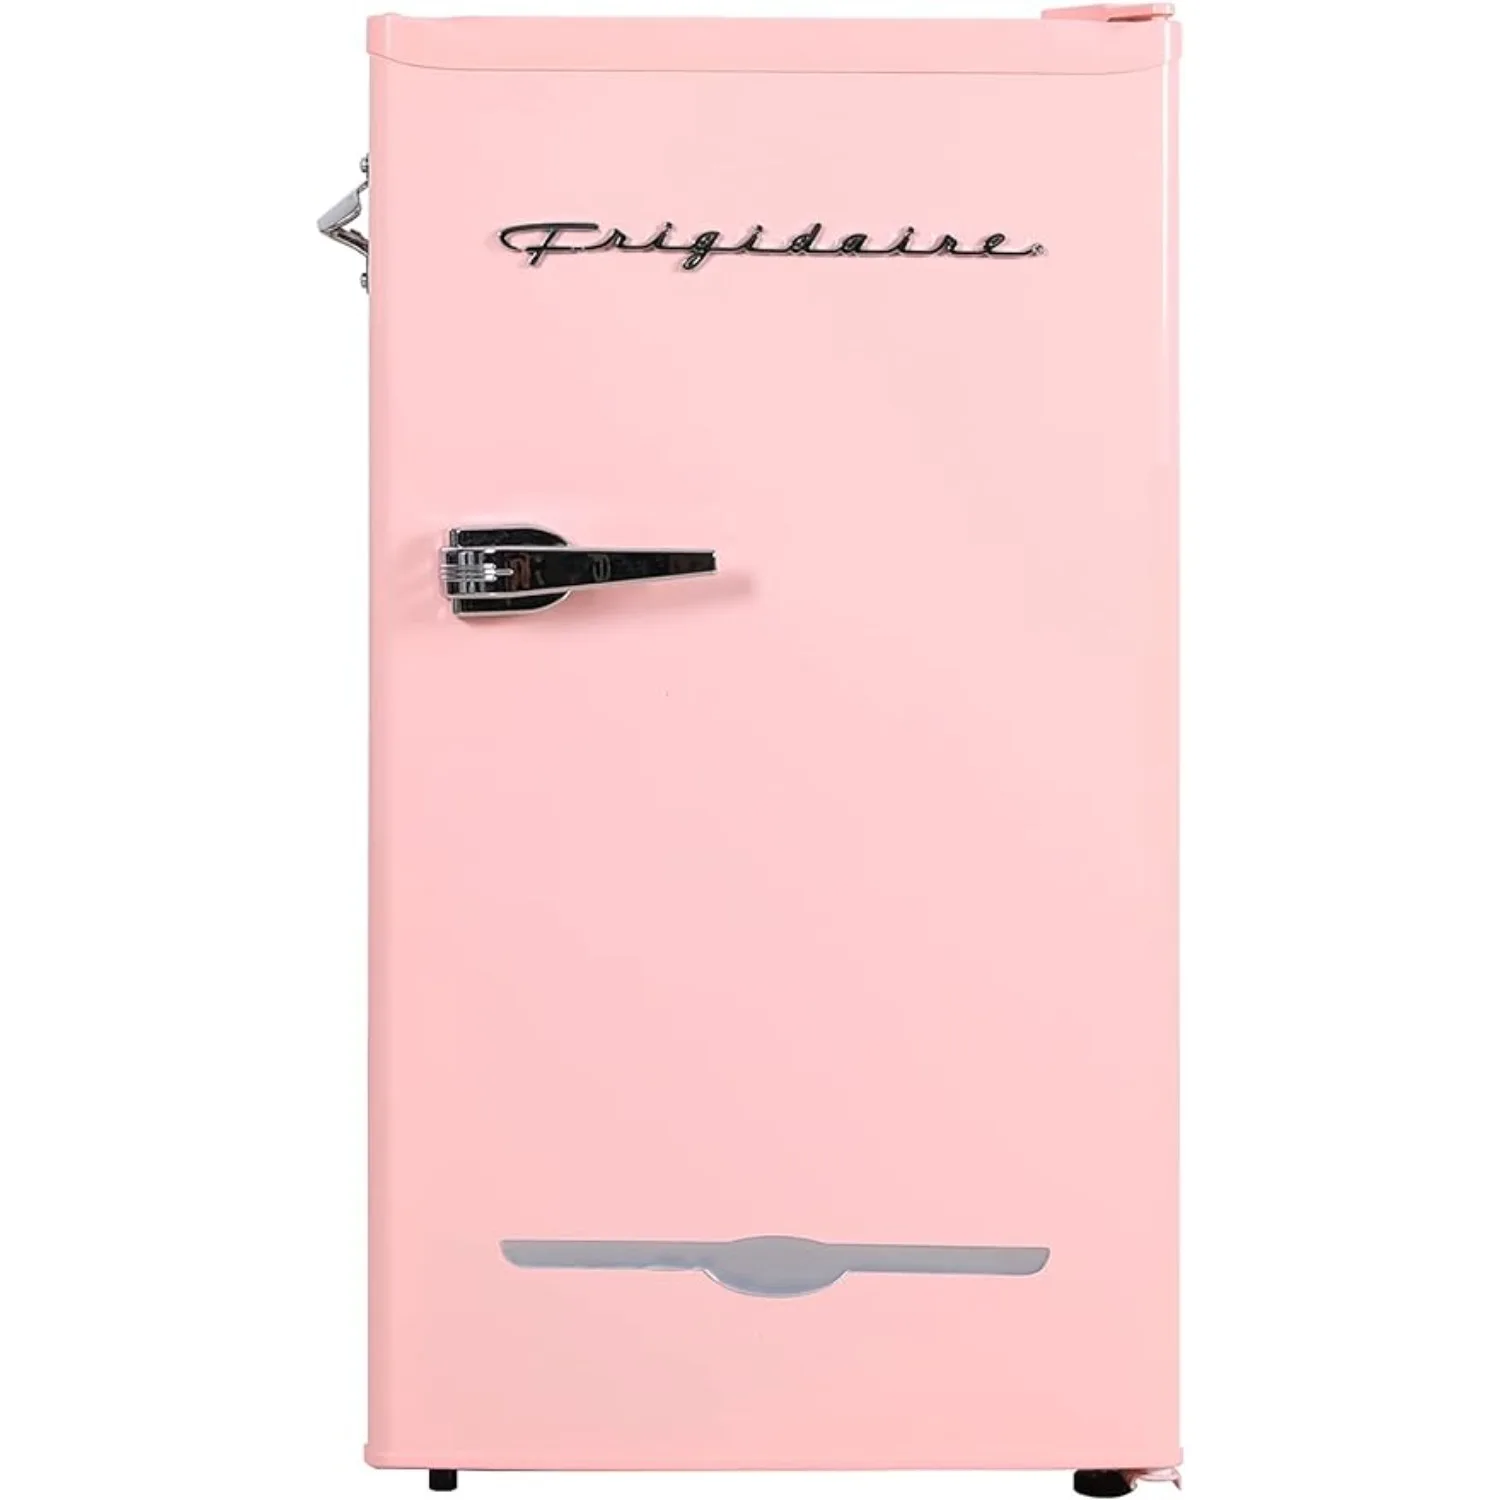 

EFR376 Retro Bar Fridge Refrigerator with Side Bottle Opener, 3.2 cu. Ft, Pink/Coral | USA | NEW